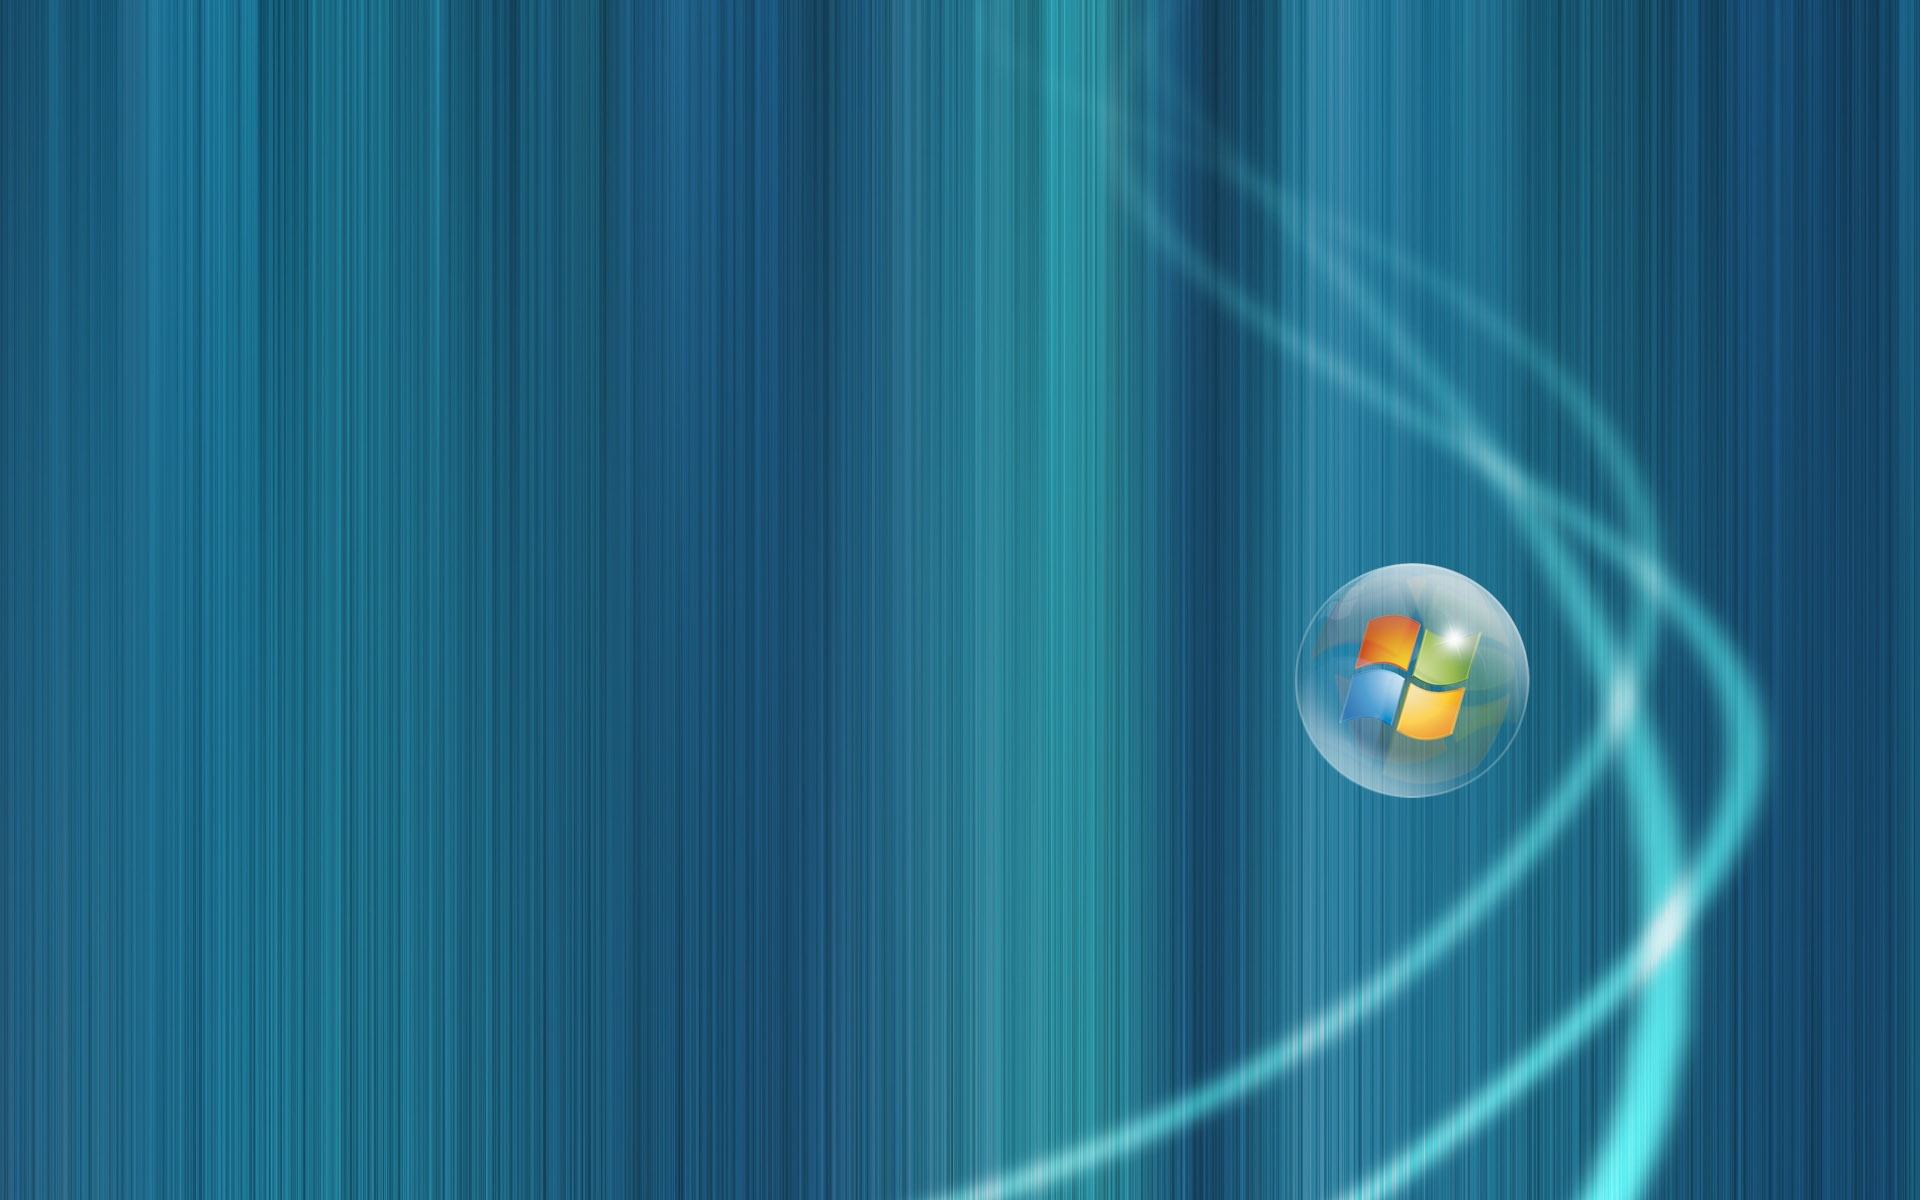 microsoft windows desktop backgrounds HD Wallpapers Backgrounds